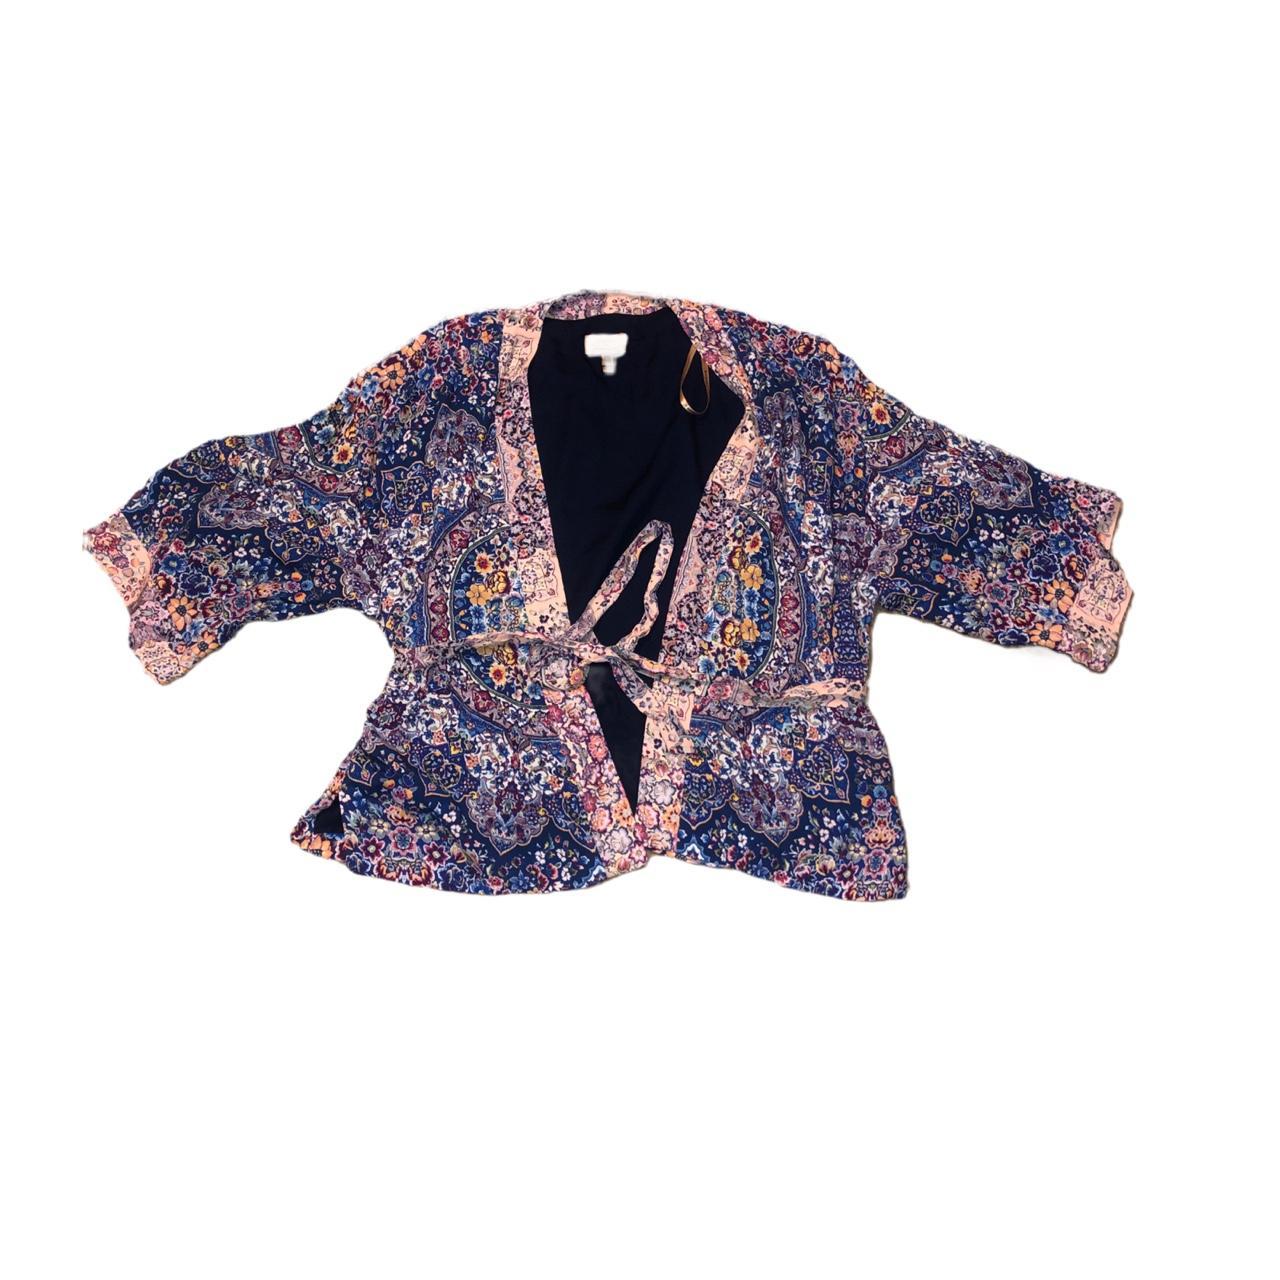 Product Image 1 - kachel x anthropologie kimono
new without